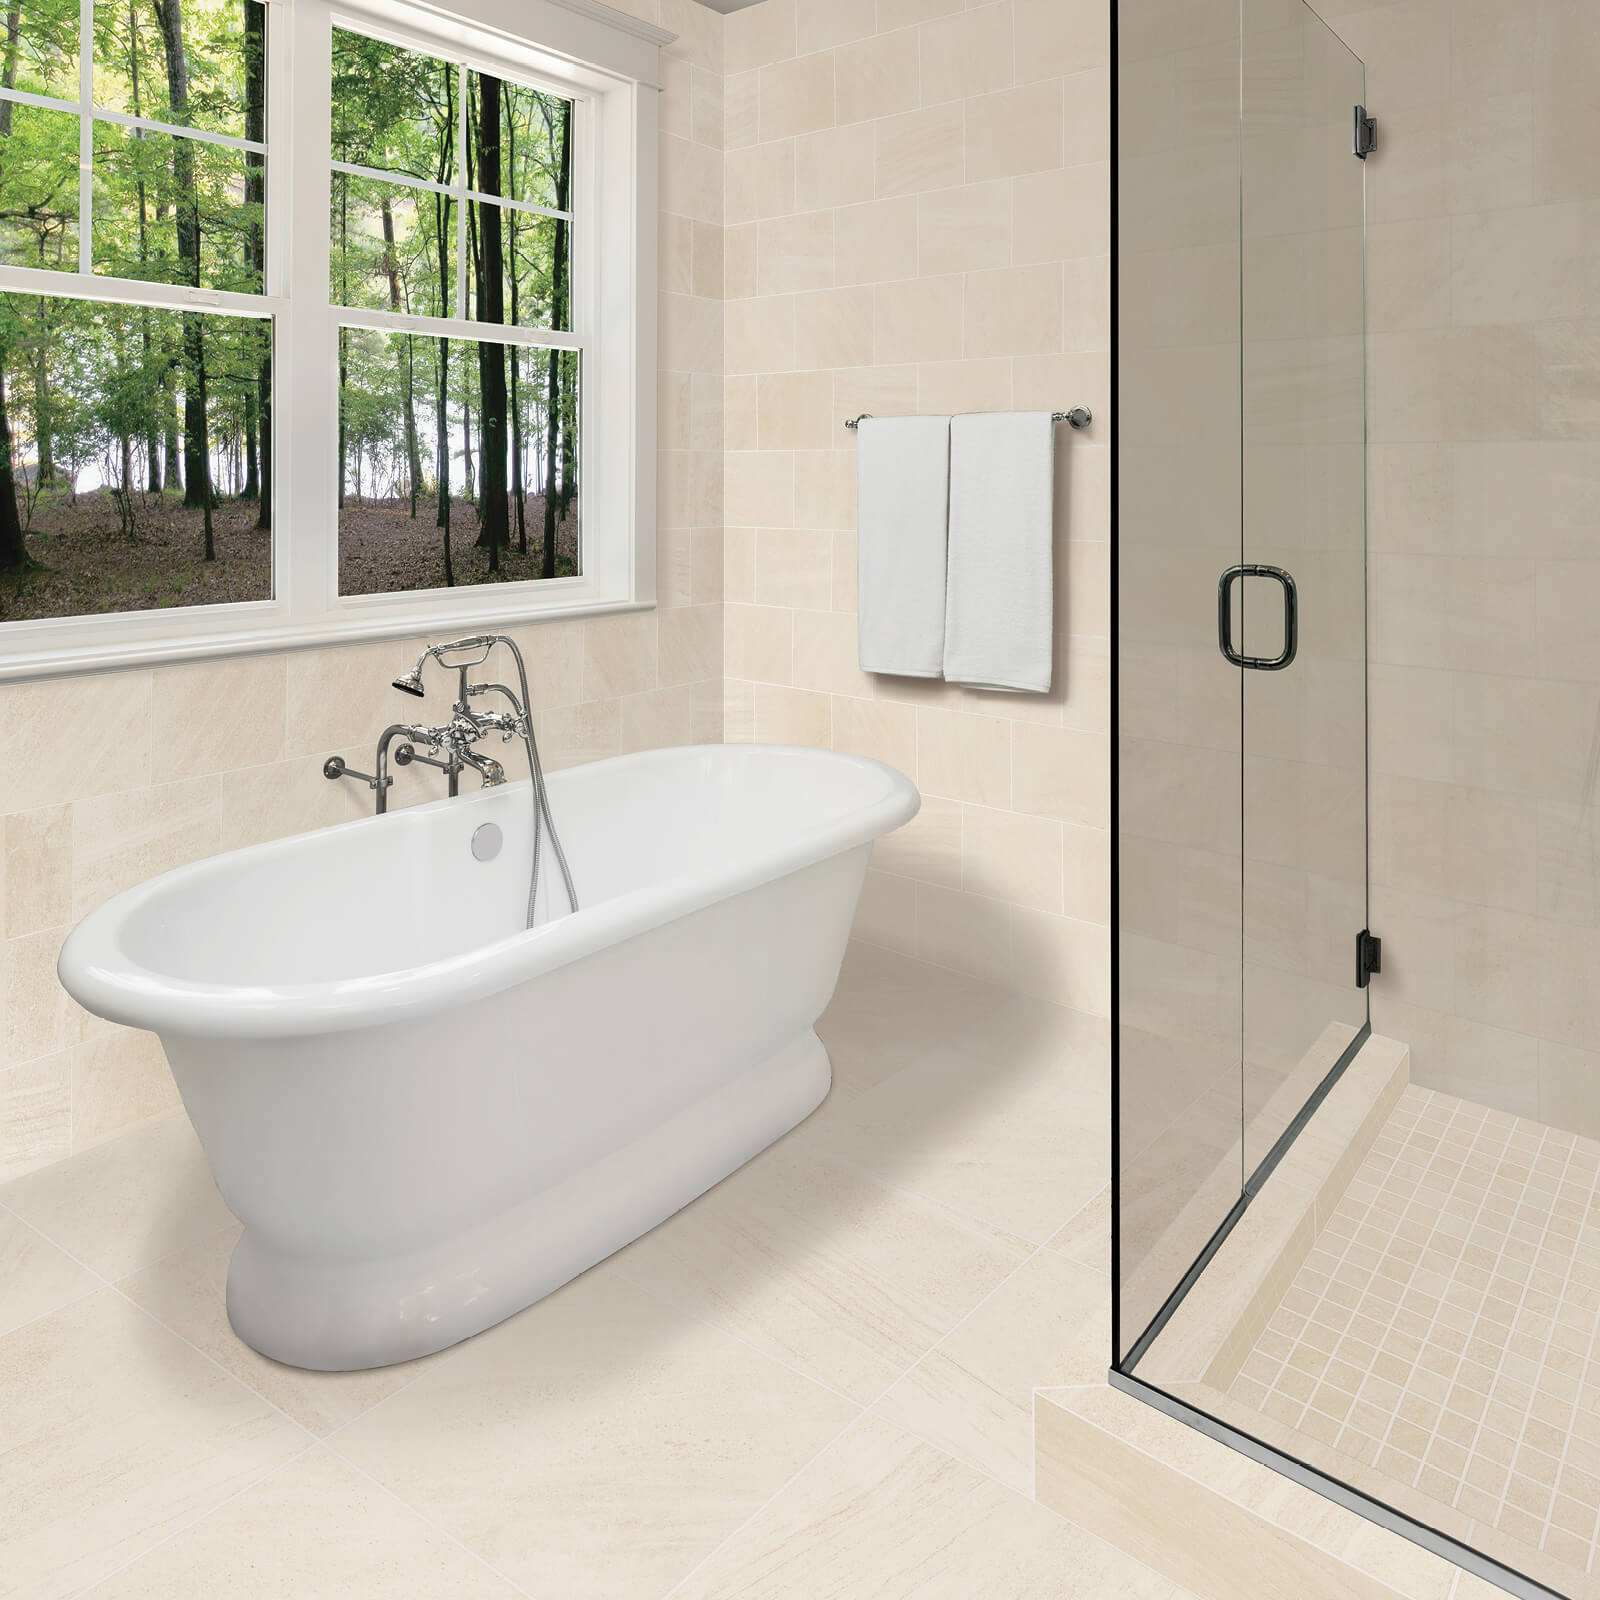 Shower room tiles | Carpetland USA Granite & Flooring